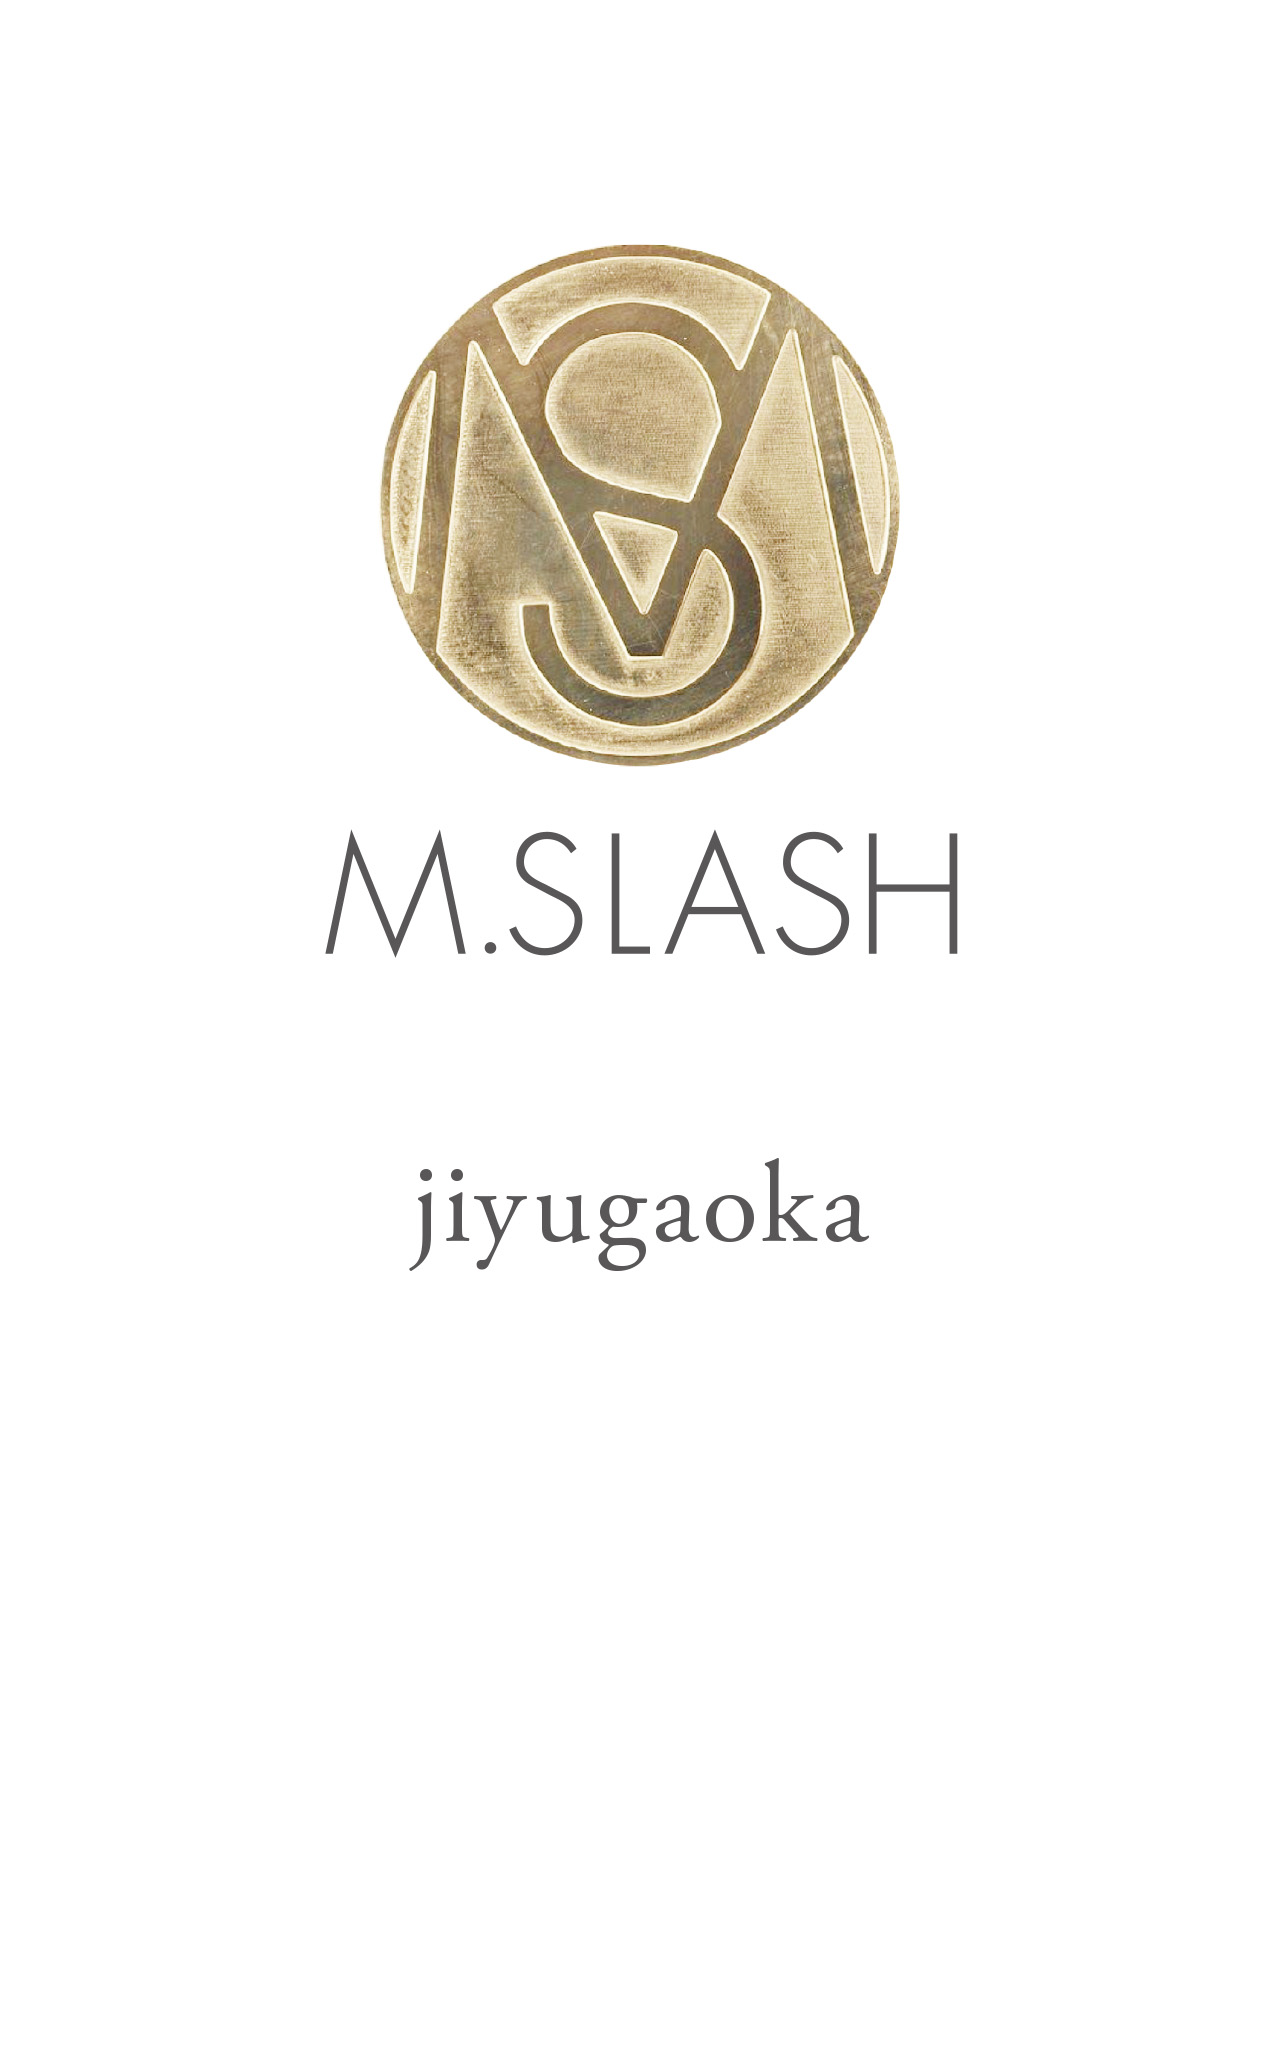 M Slash 自由が丘 エムスラッシュ 東京都 Zeetleショップクーポンコレクション